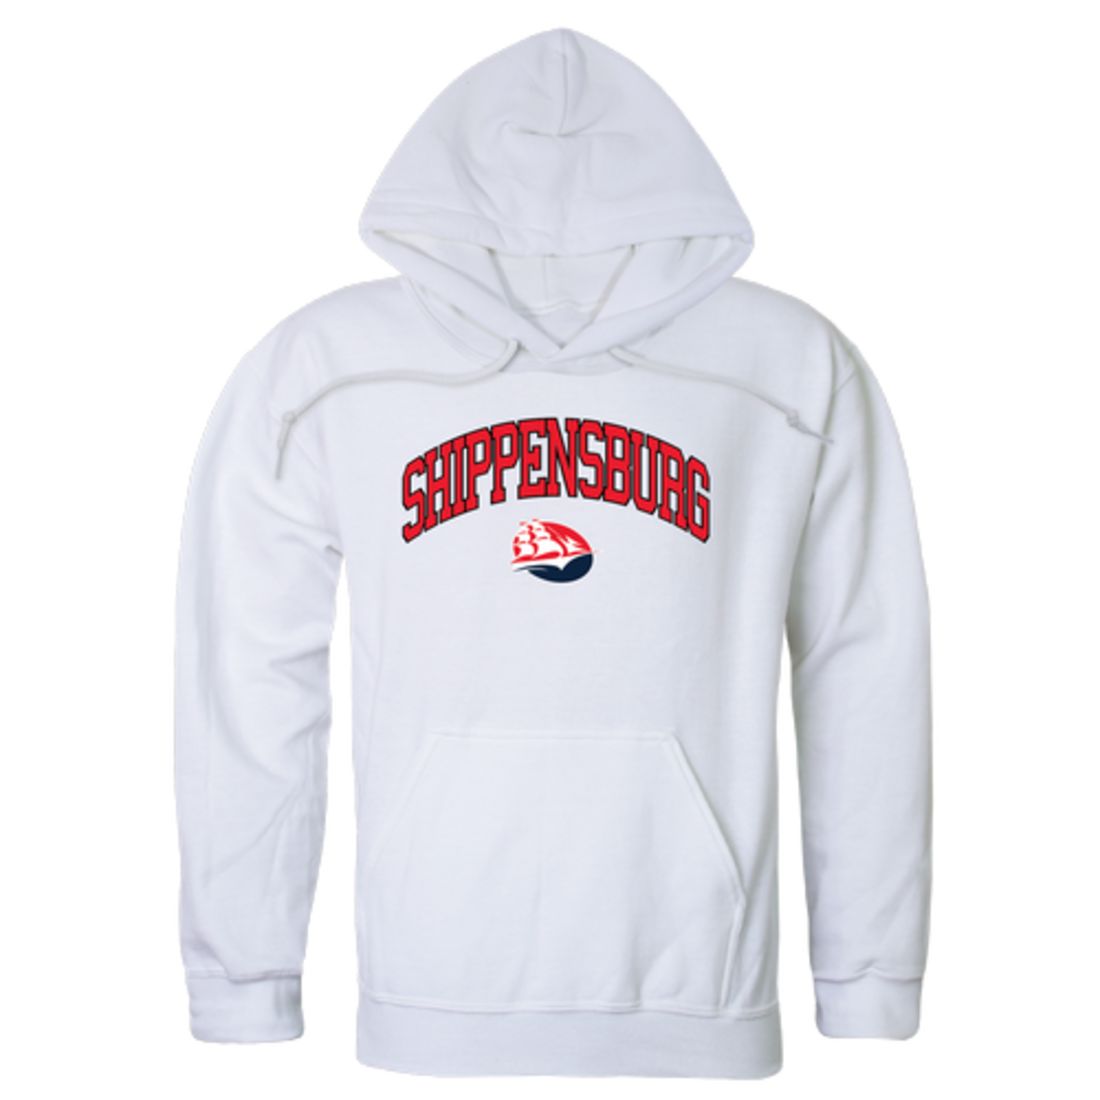 Shippensburg University Raiders Campus Fleece Hoodie Sweatshirts